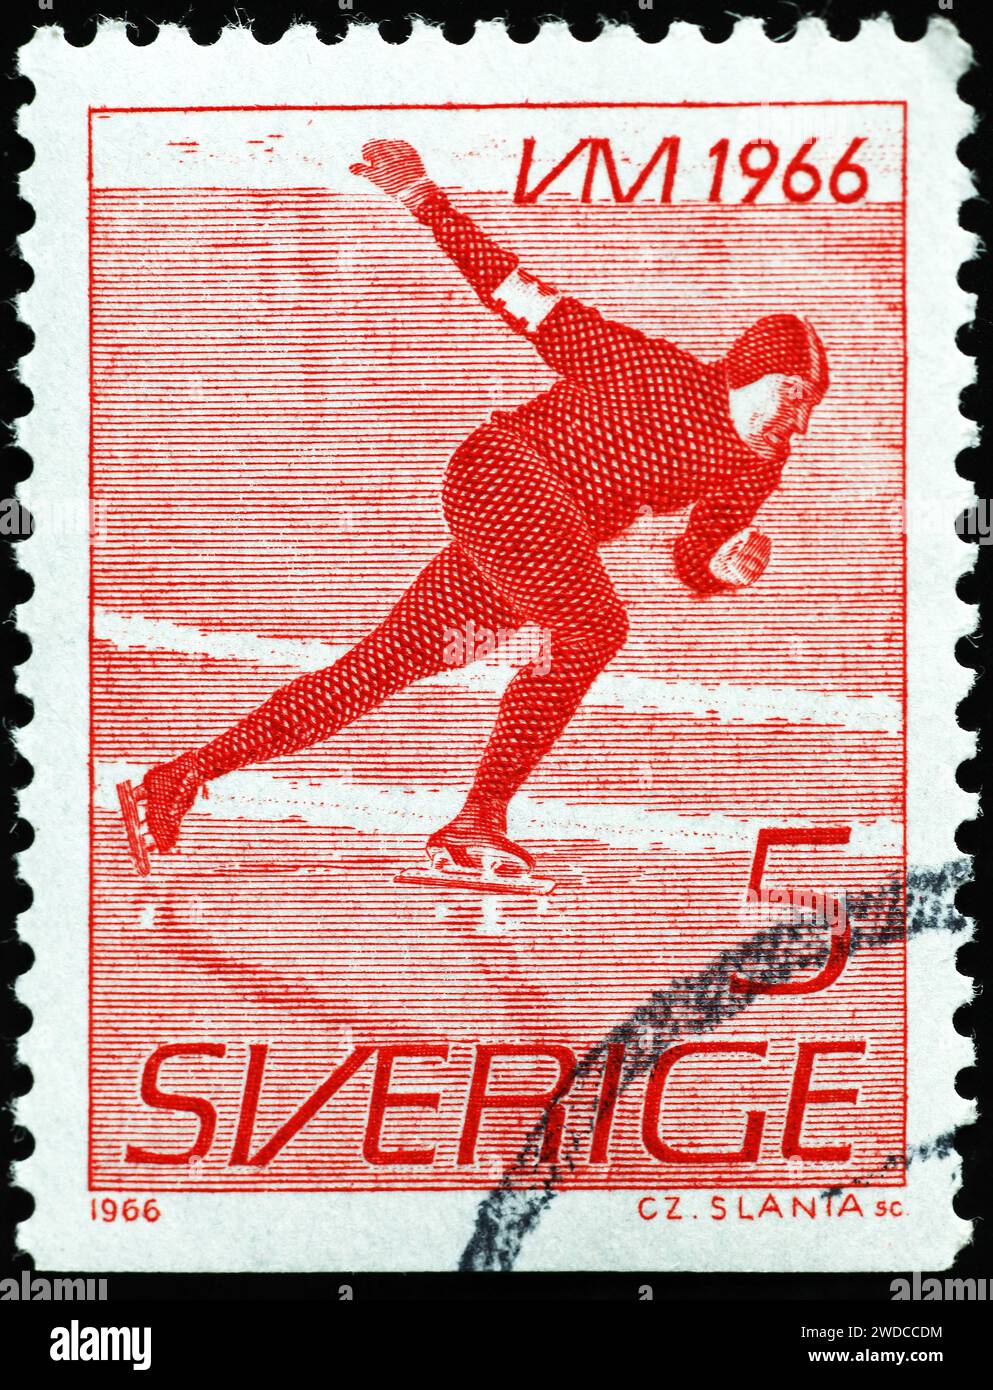 Speed skater on vintage swedish stamp Stock Photo